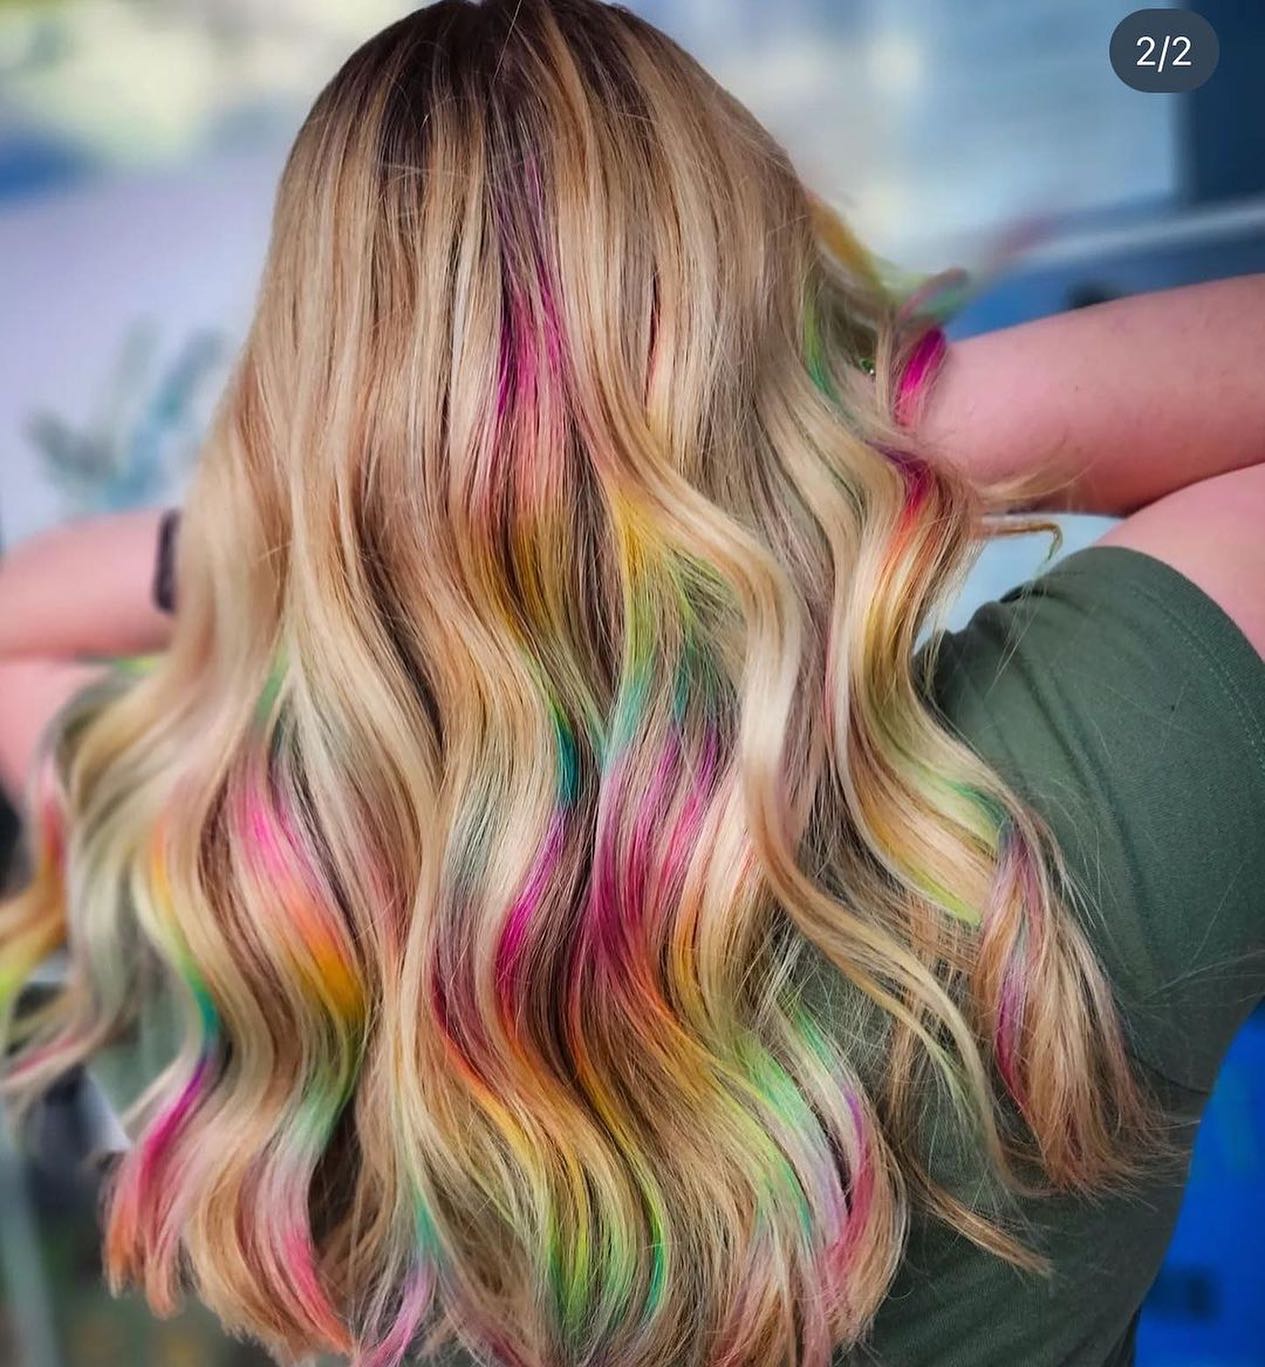 Wavy Blonde Hair With Rainbow Streaks